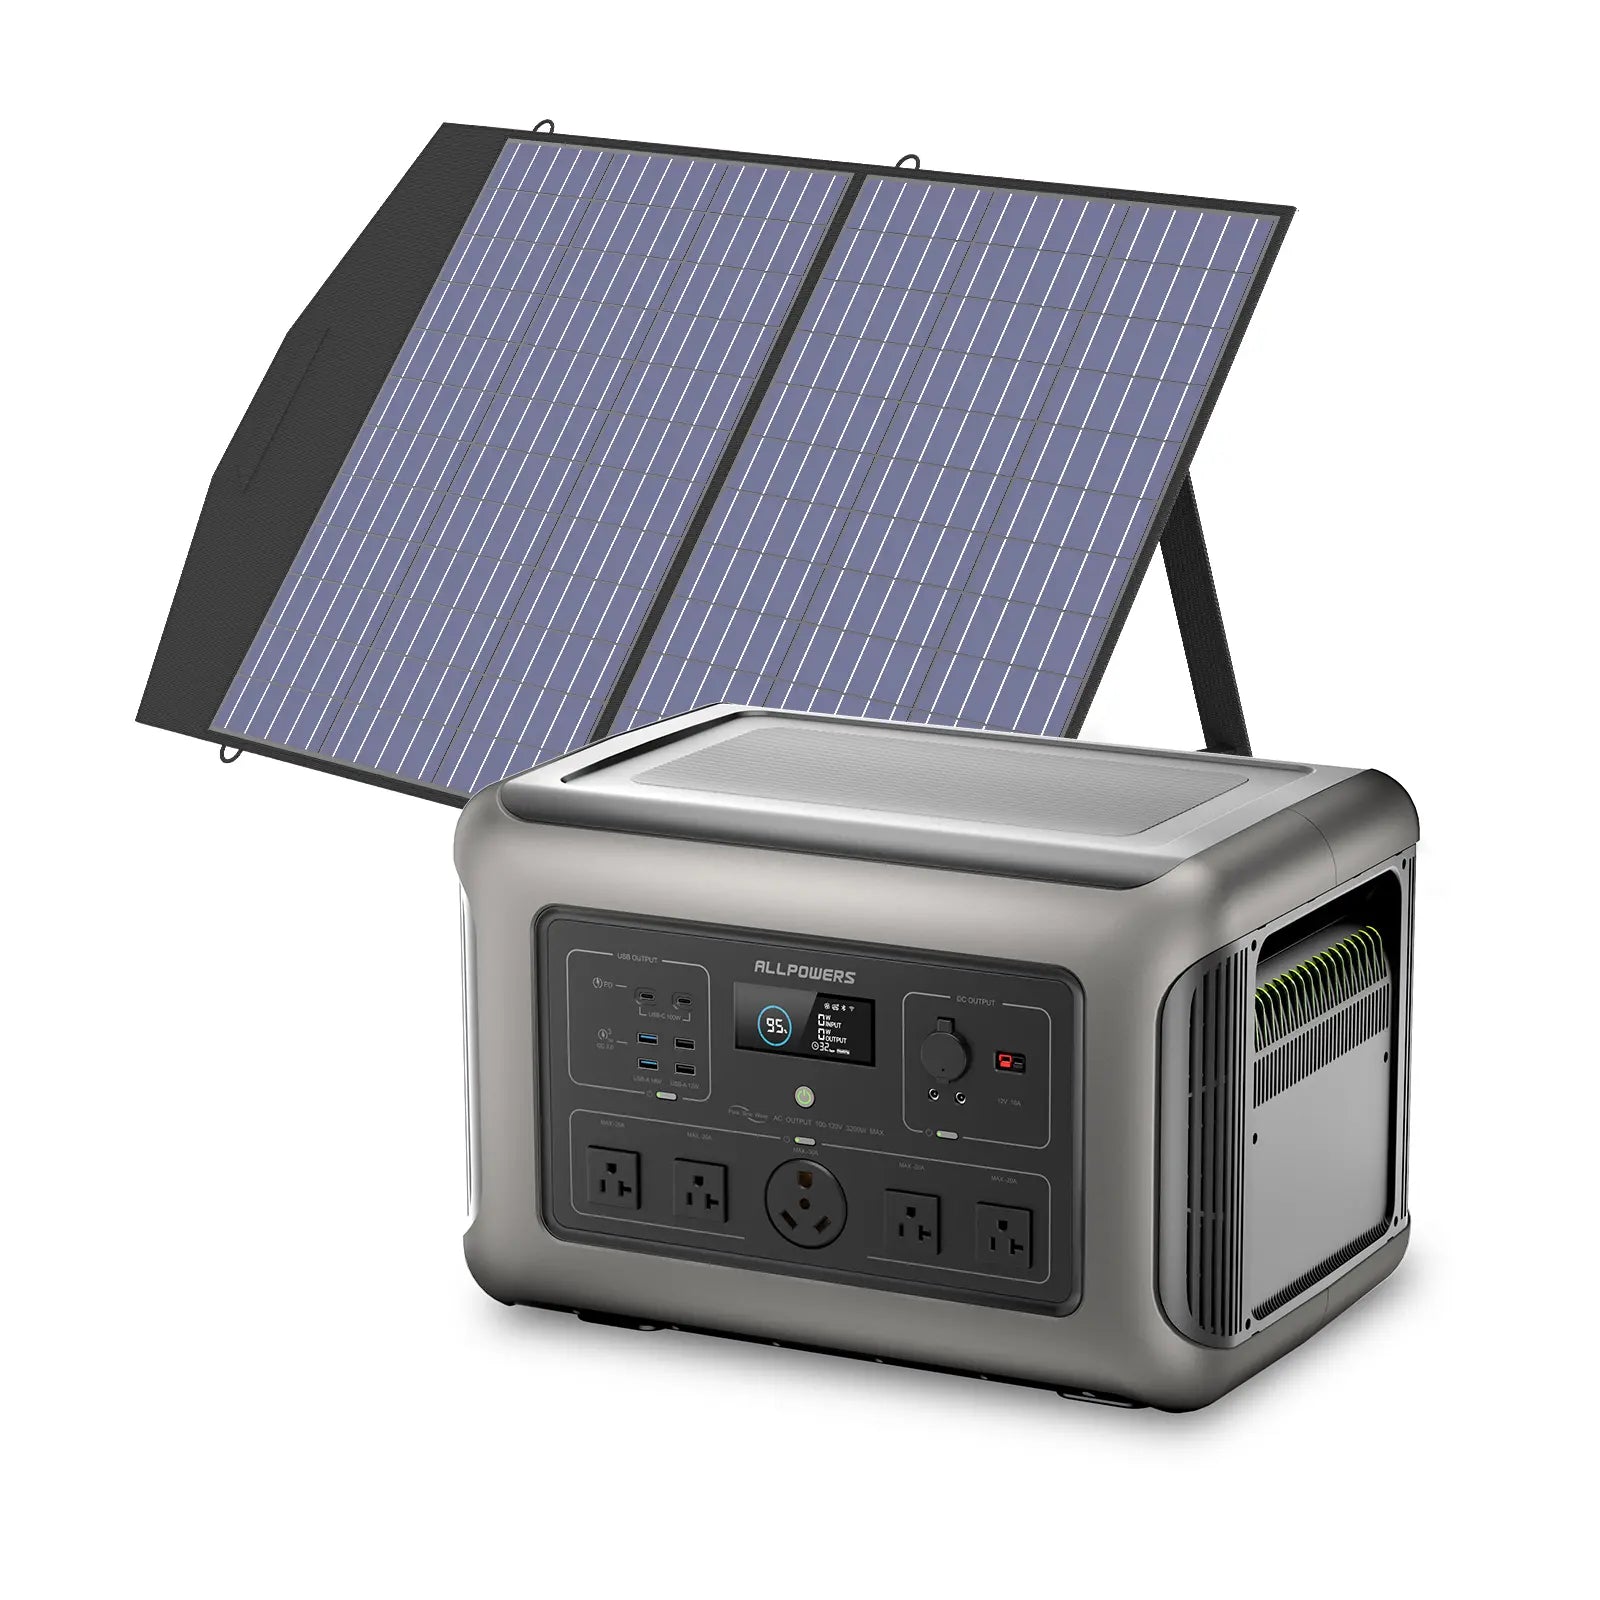 Three in one plug and play 3000W portable solar power generator